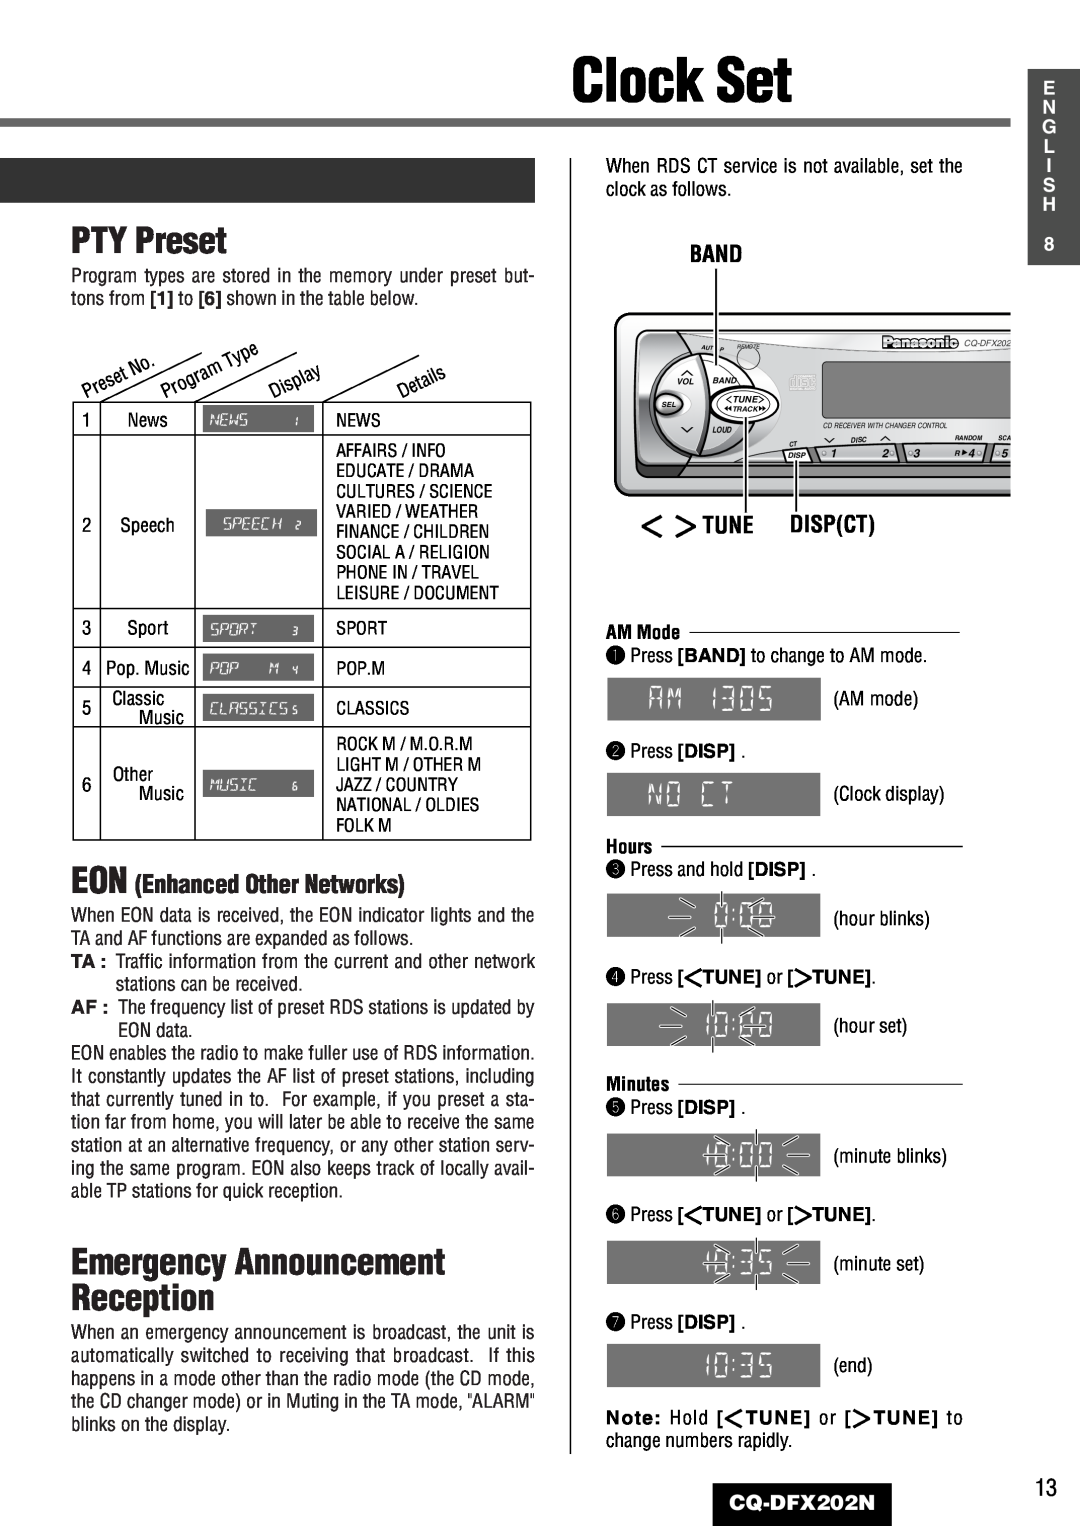 Panasonic CQ-DFX202N EON Enhanced Other Networks, Tune Dispct, Clock Set, PTY Preset, Emergency Announcement Reception 